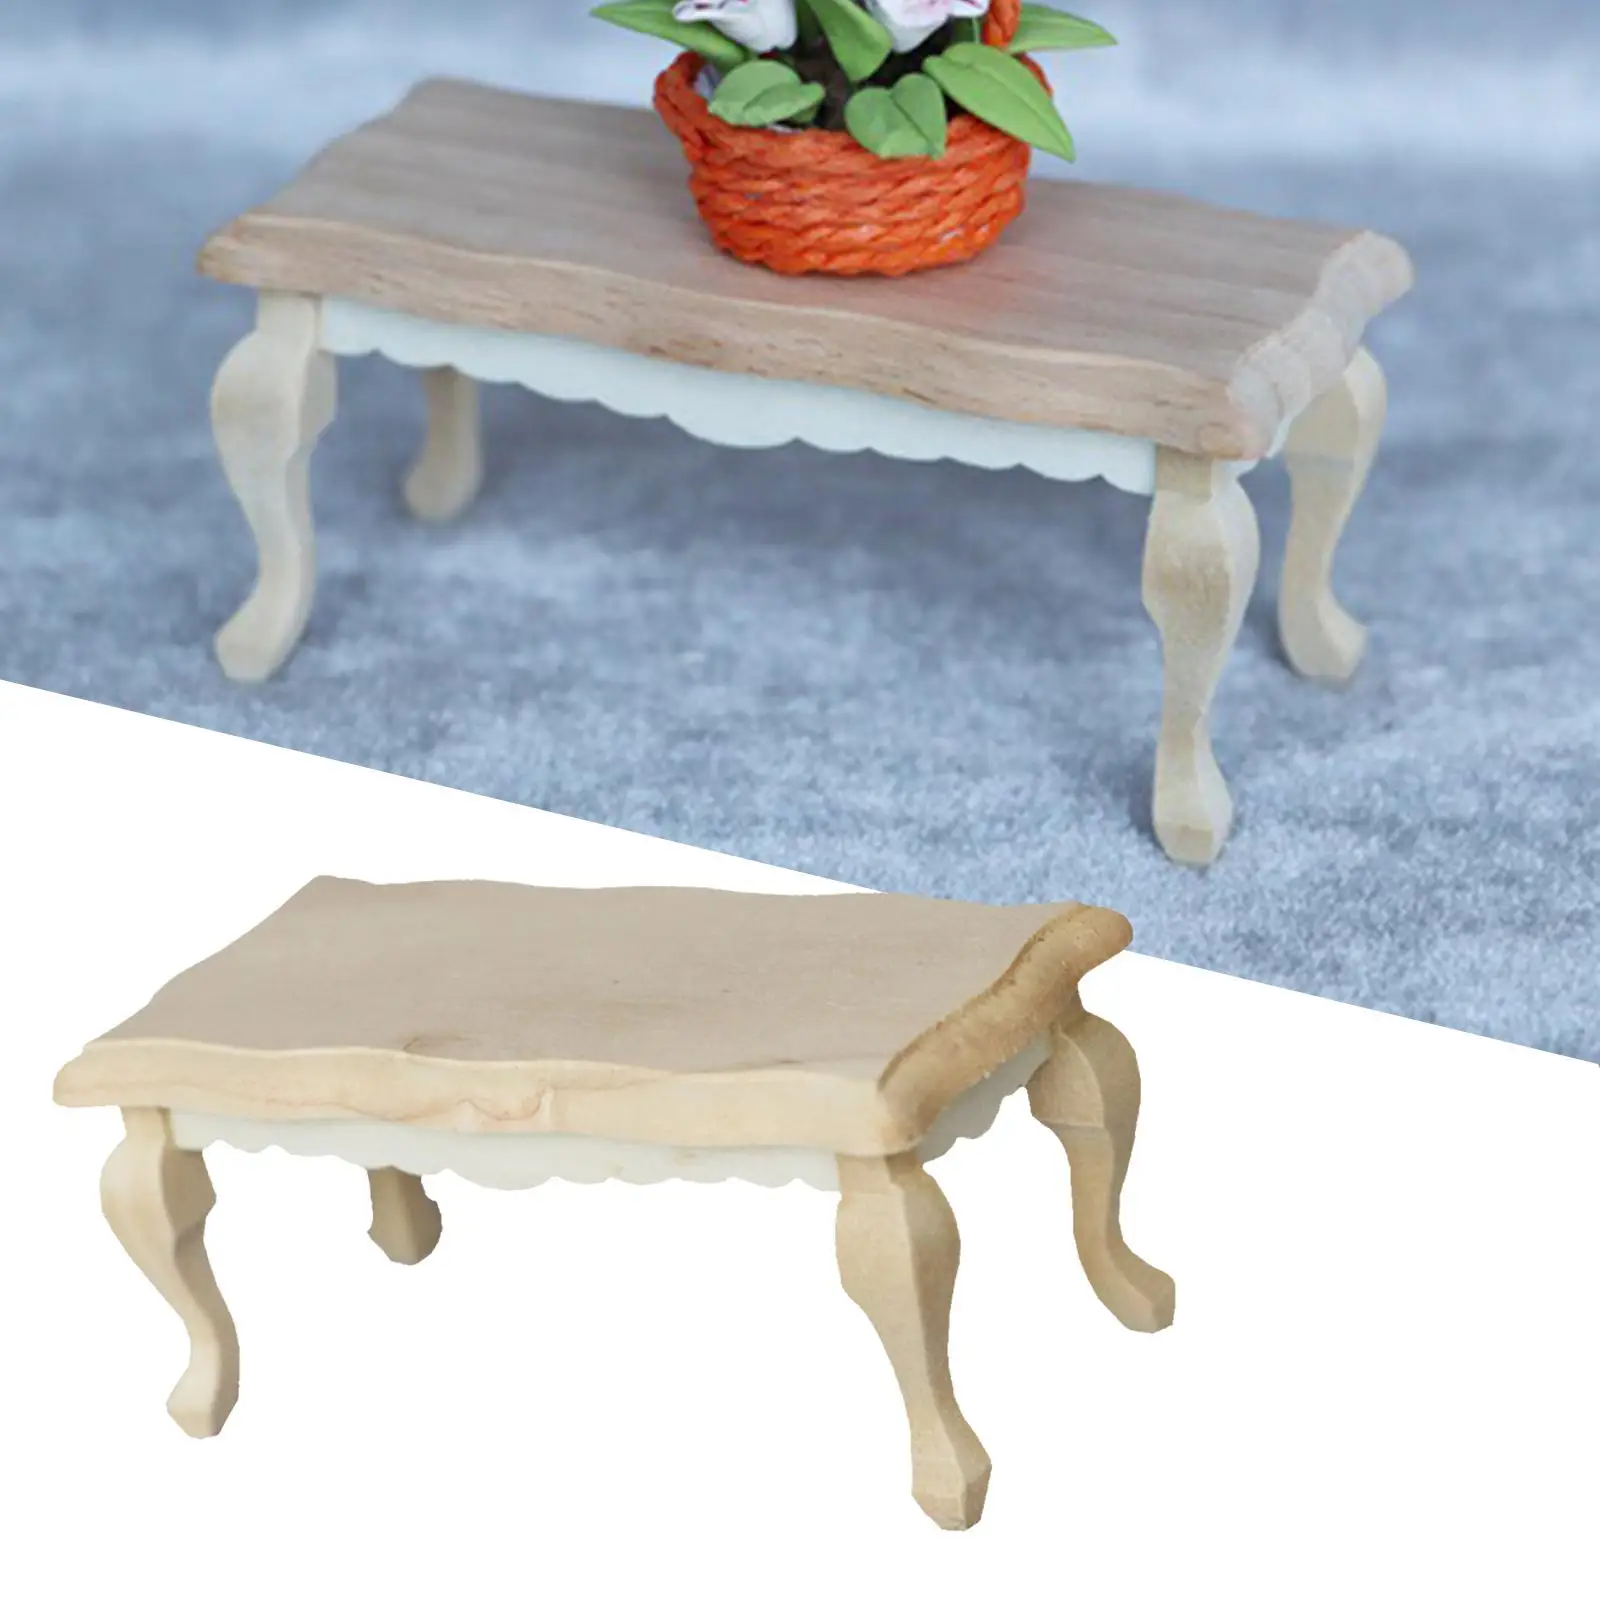 1:12 Dollhouse Table Miniature Ornament Living Room Scene Wood for Girls